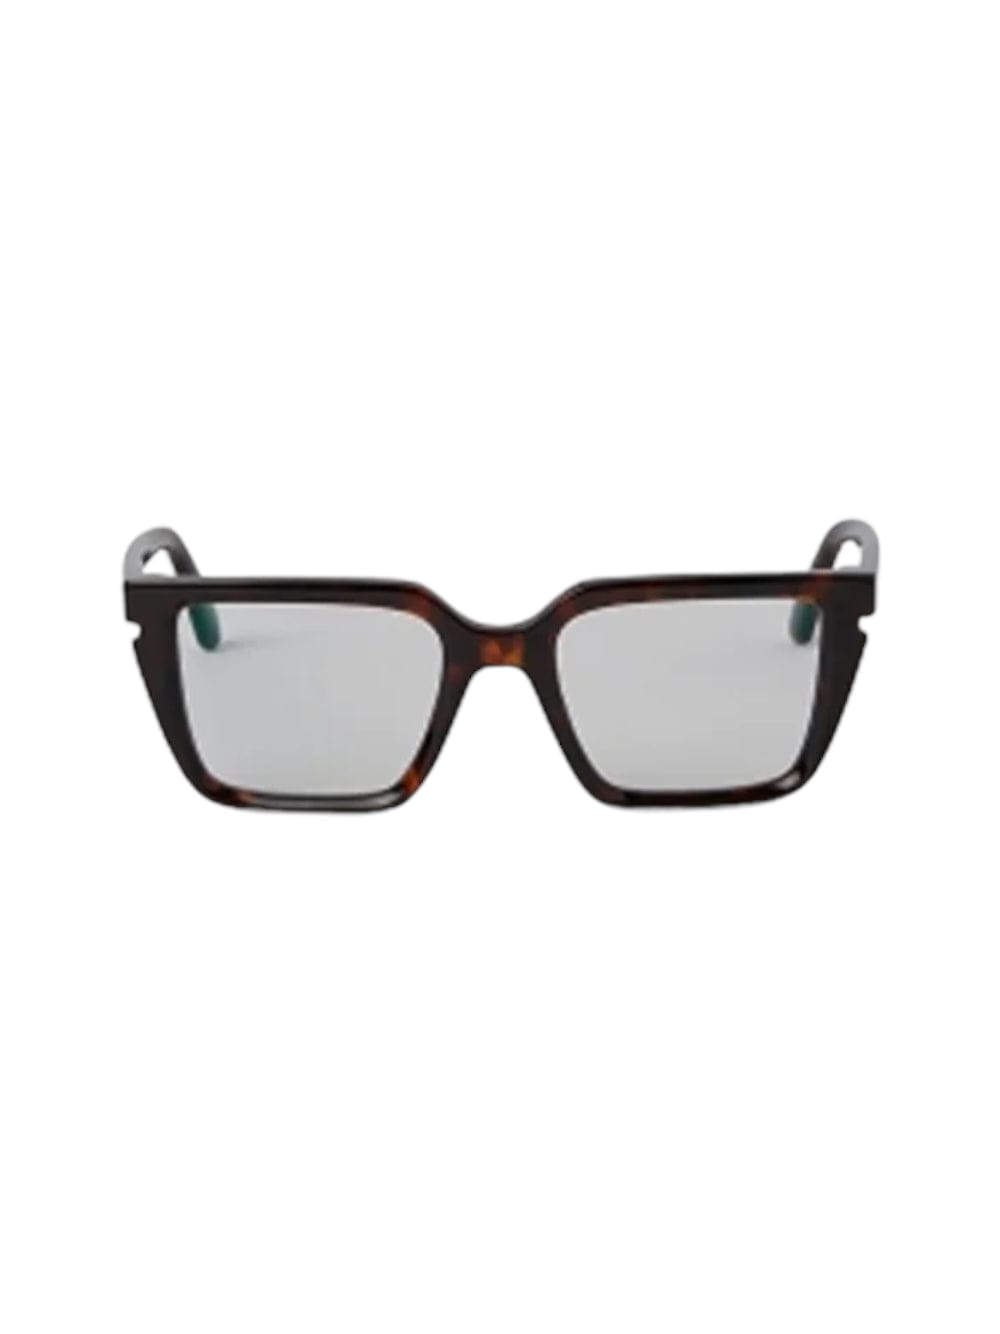 Style 52 - Oerj052 Glasses